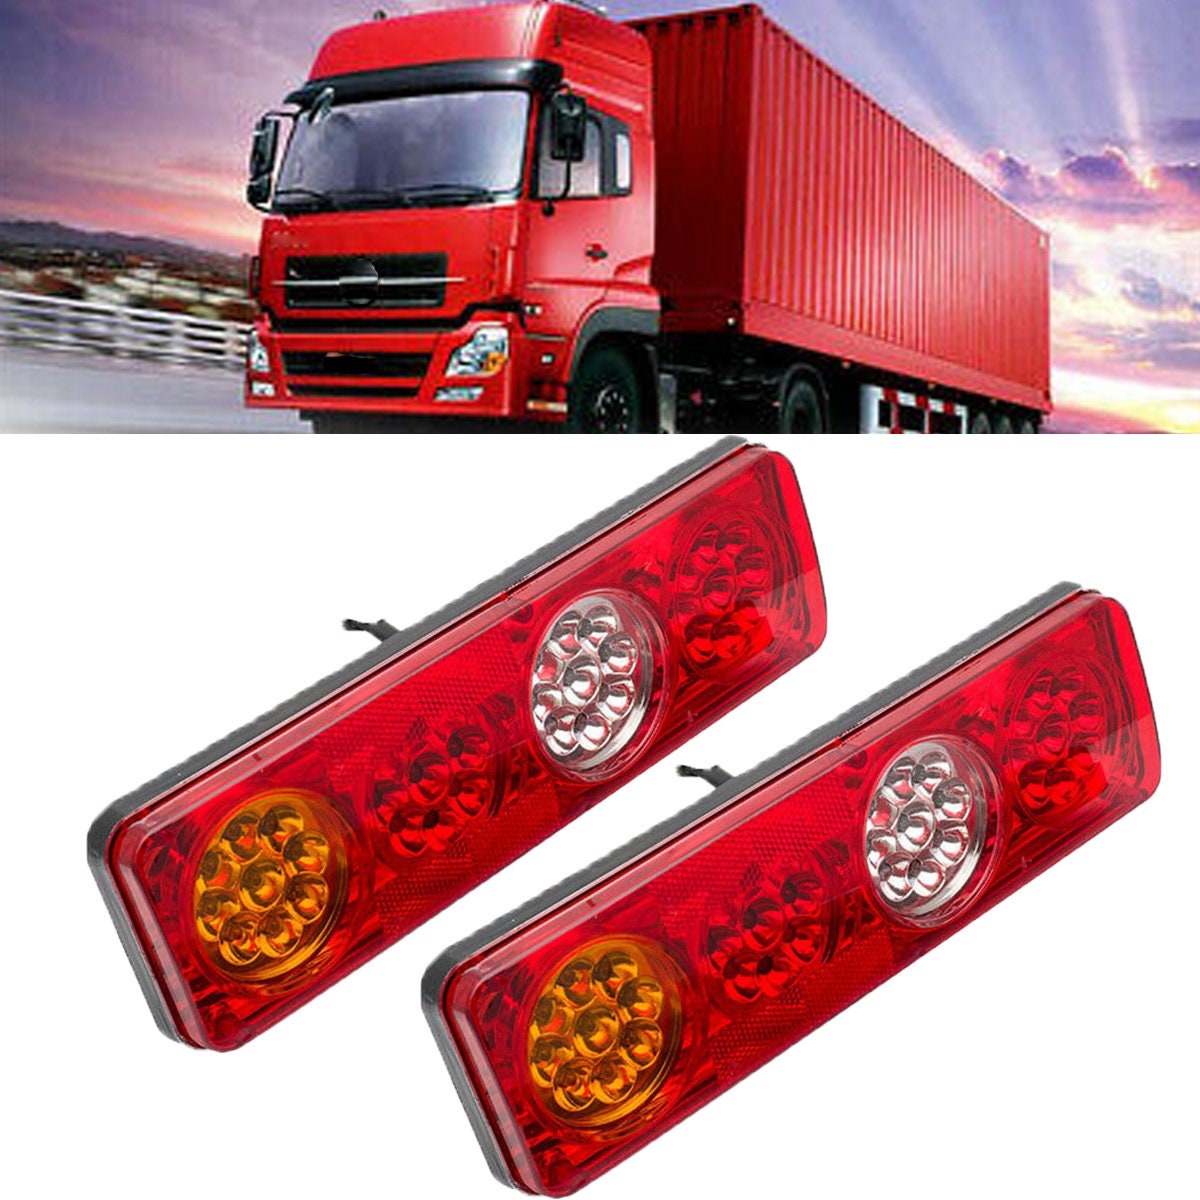 2 LED Rear Red Frontier Lights & License Plate Lamp 24V Truck Trailer Bus